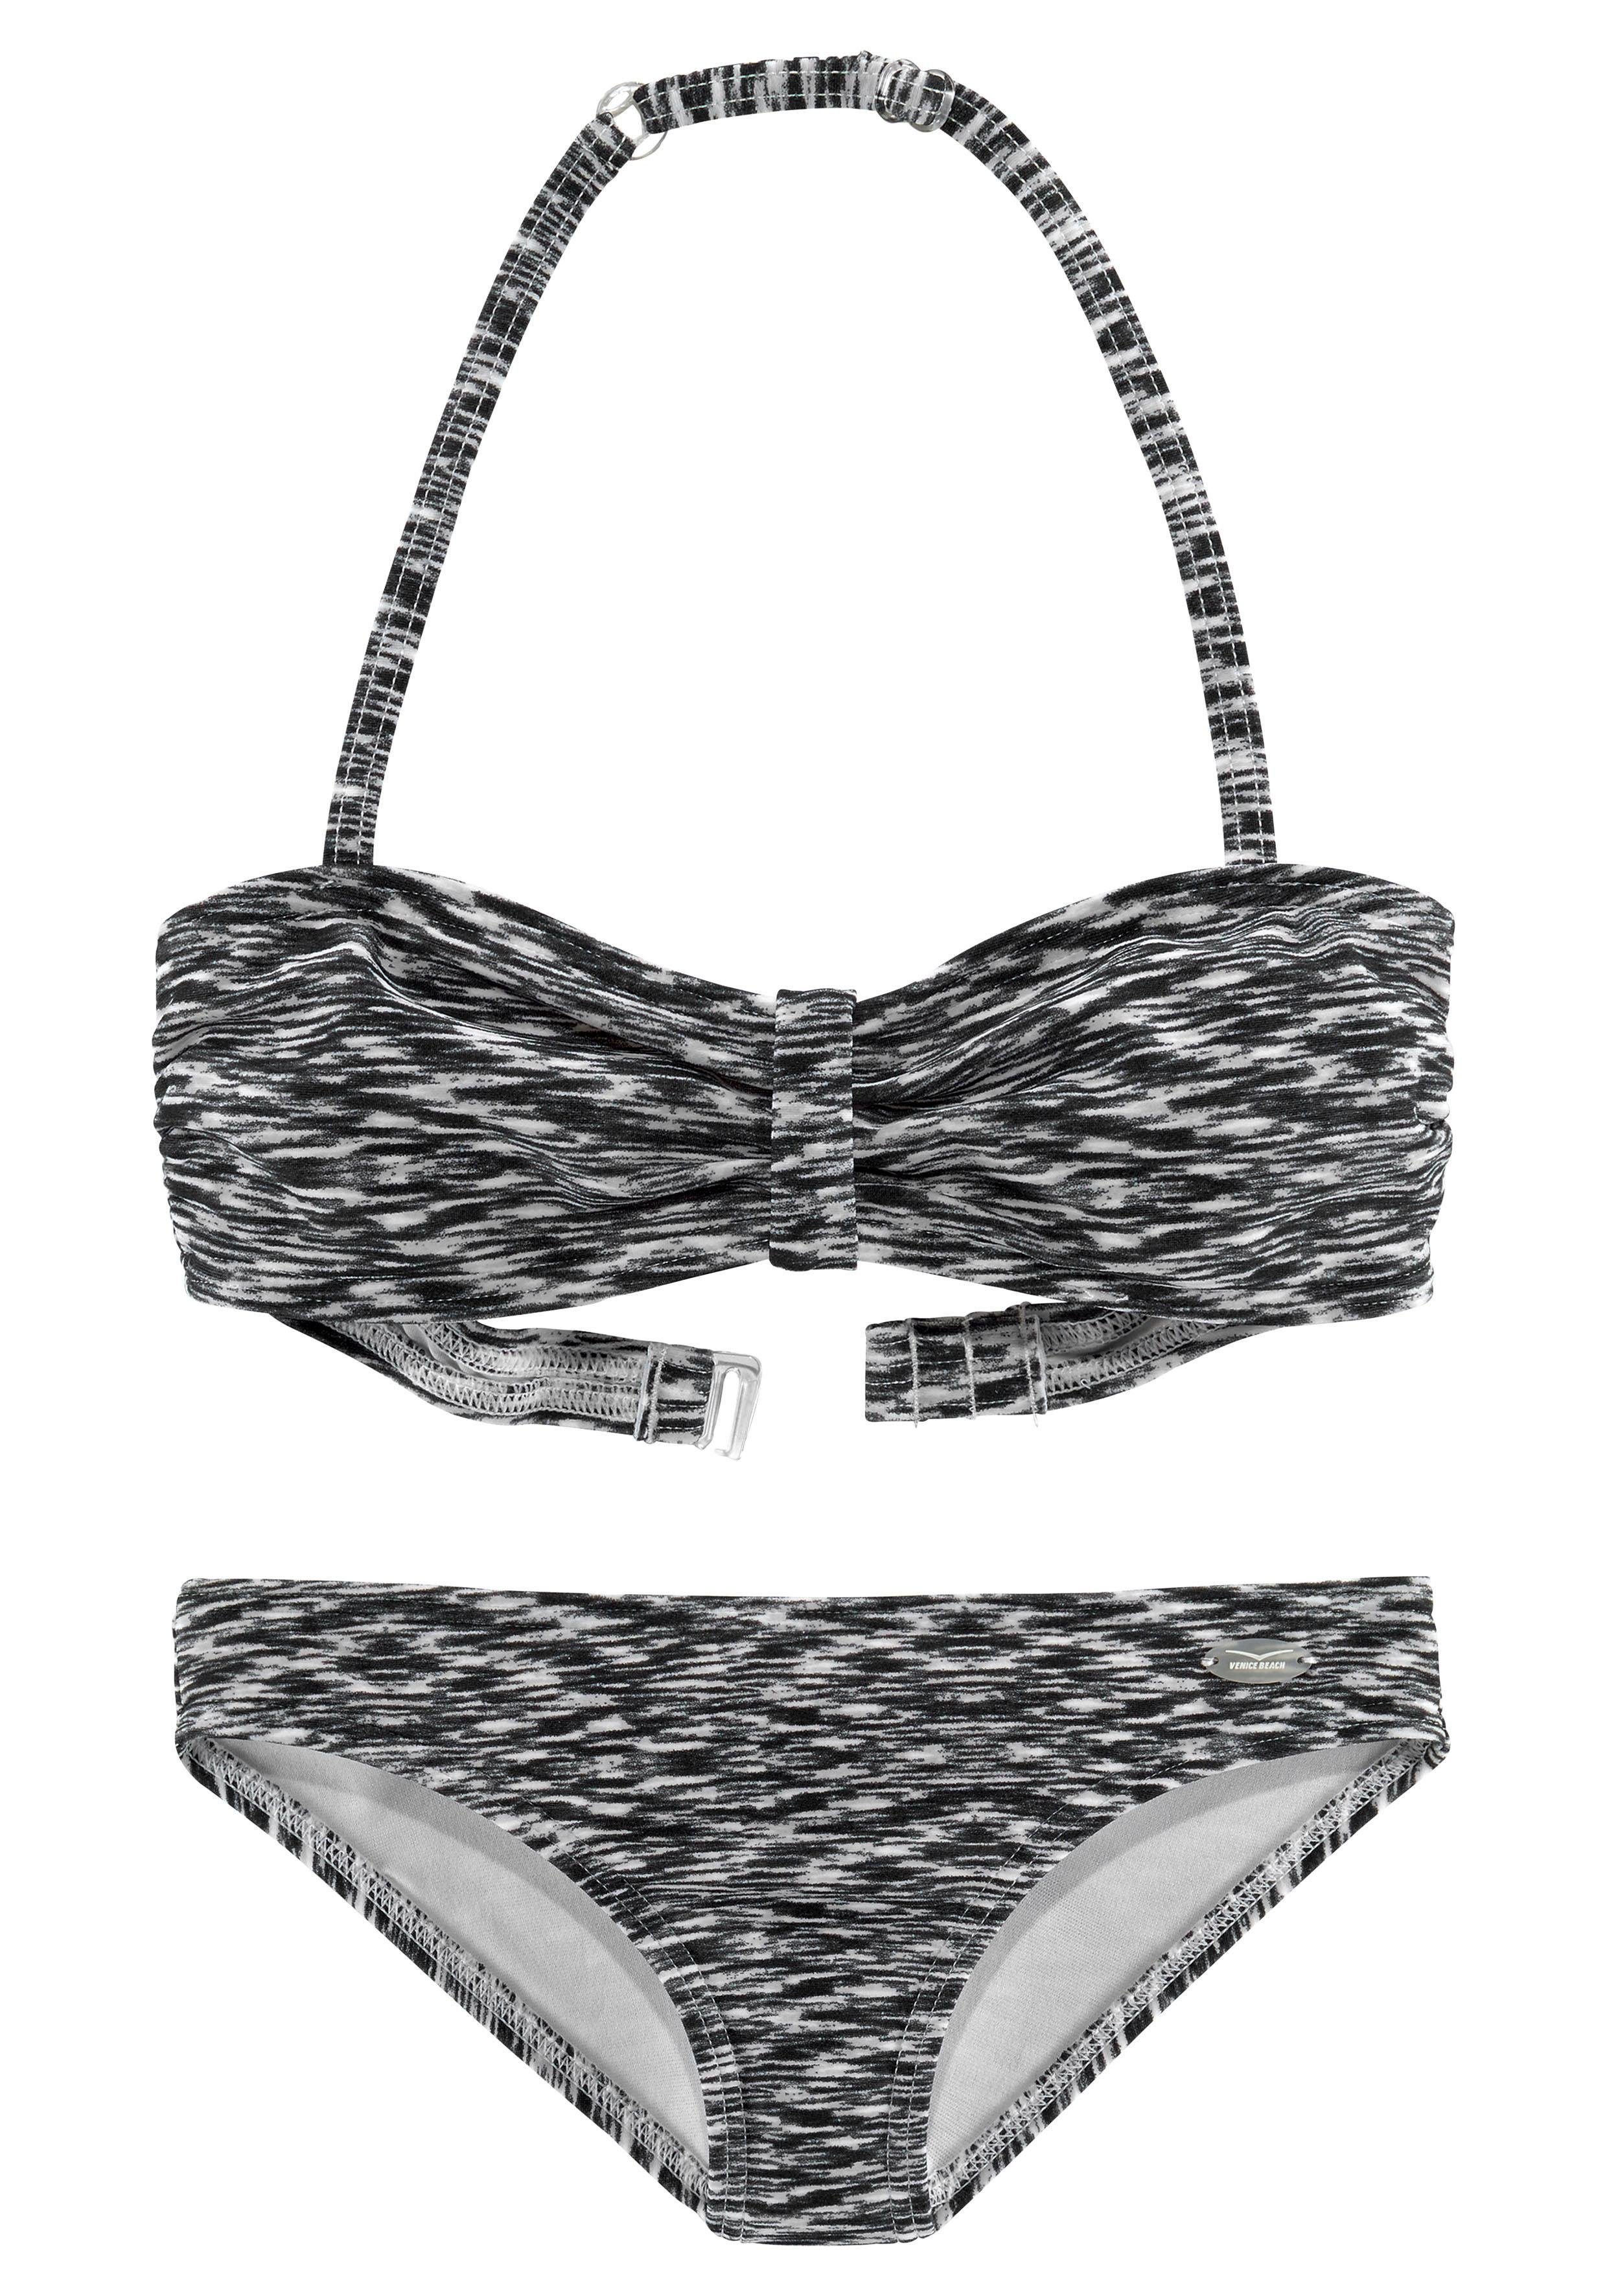 Venice Beach Bandeau-Bikini in Melange-Optik schwarz-weiß